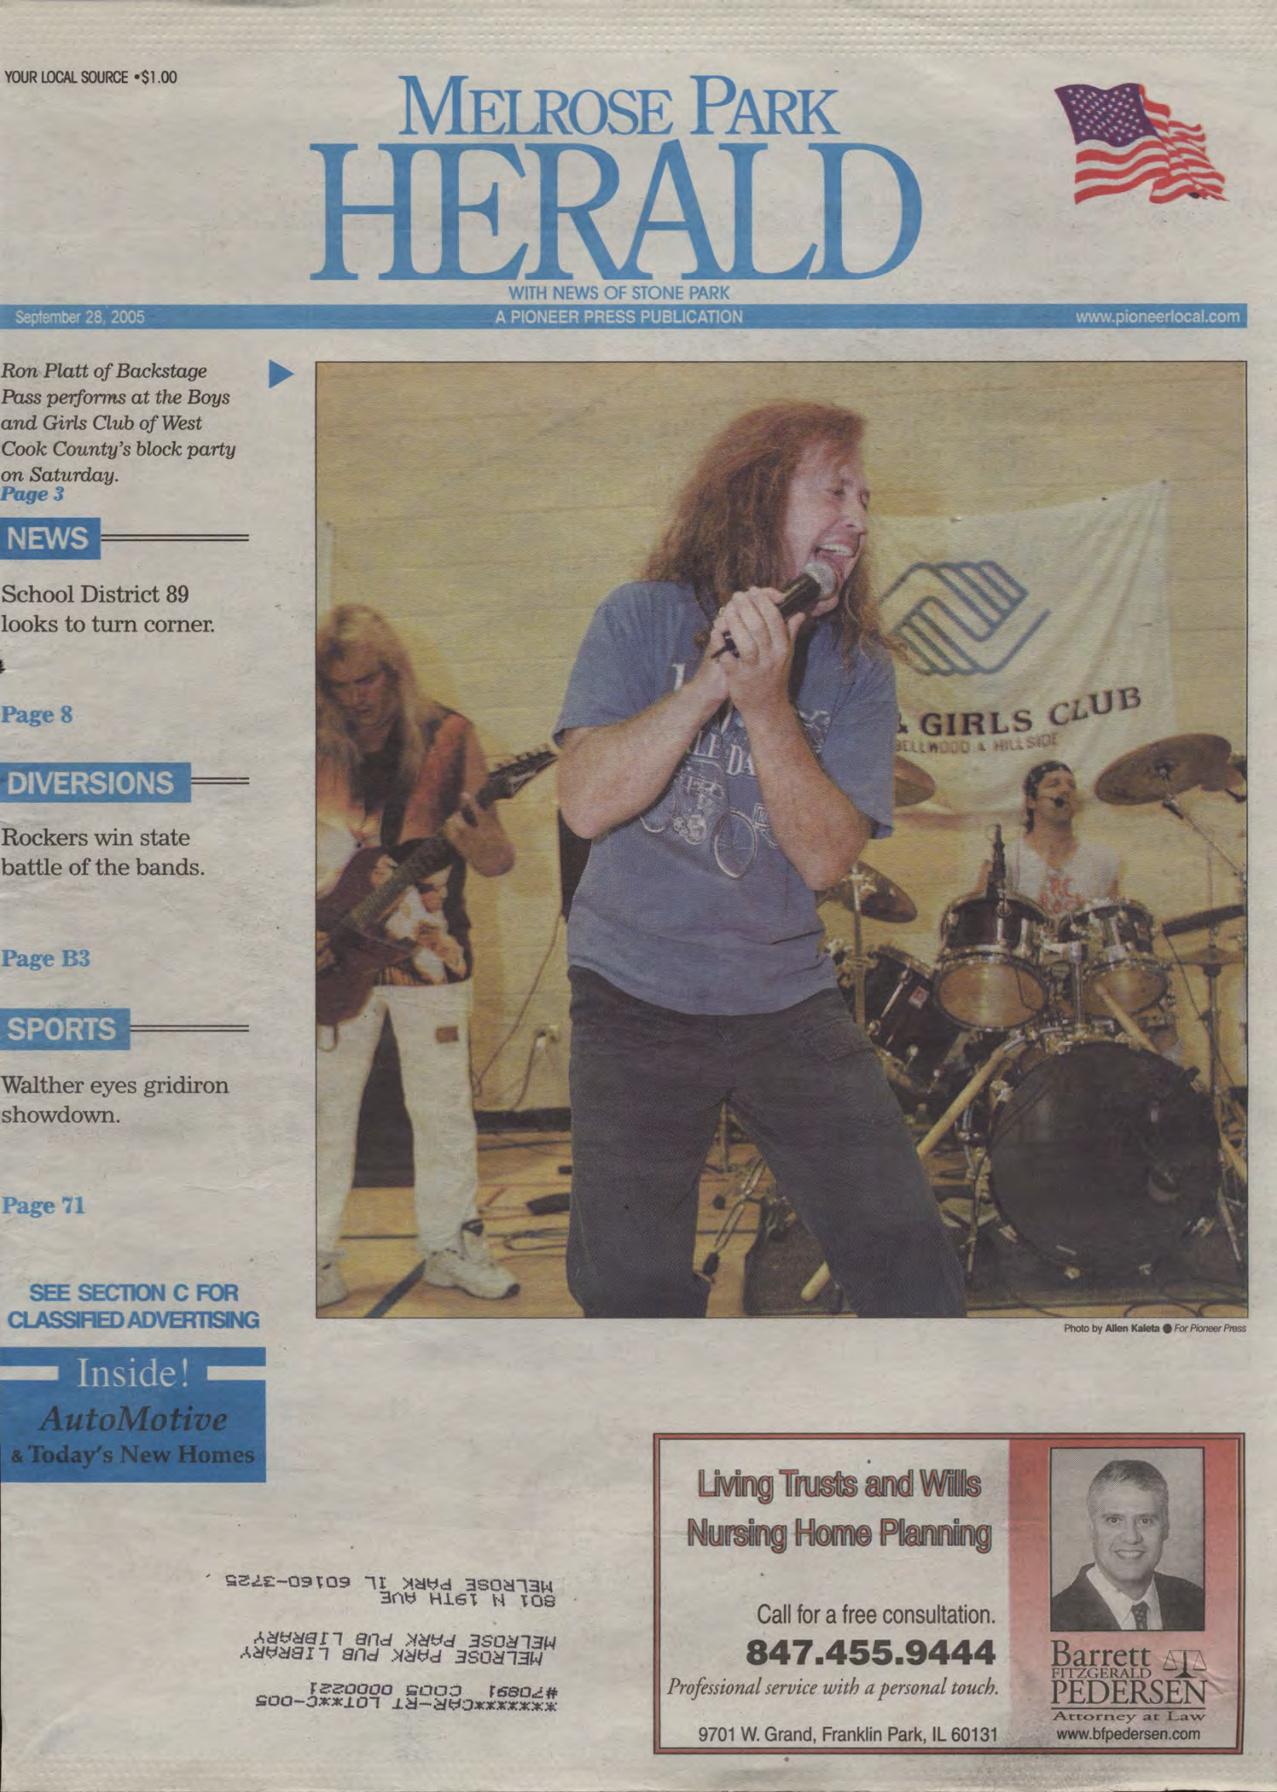 The Herald – 20050928